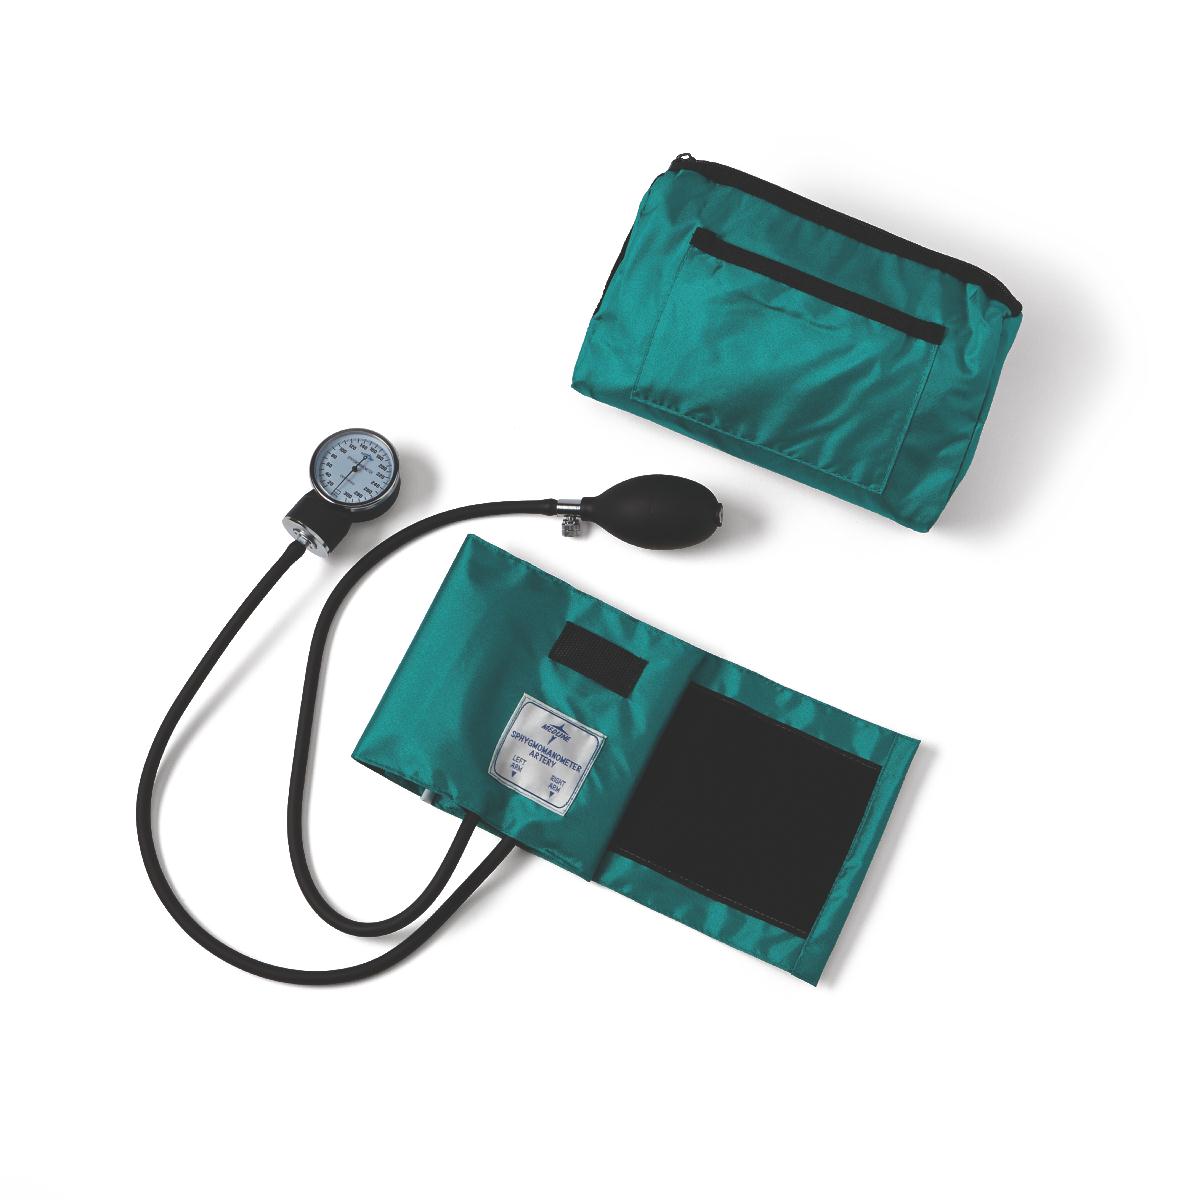 Compli-Mates Handheld Aneroid Sphygmomanometer with Nylon Case, Teal, Adult